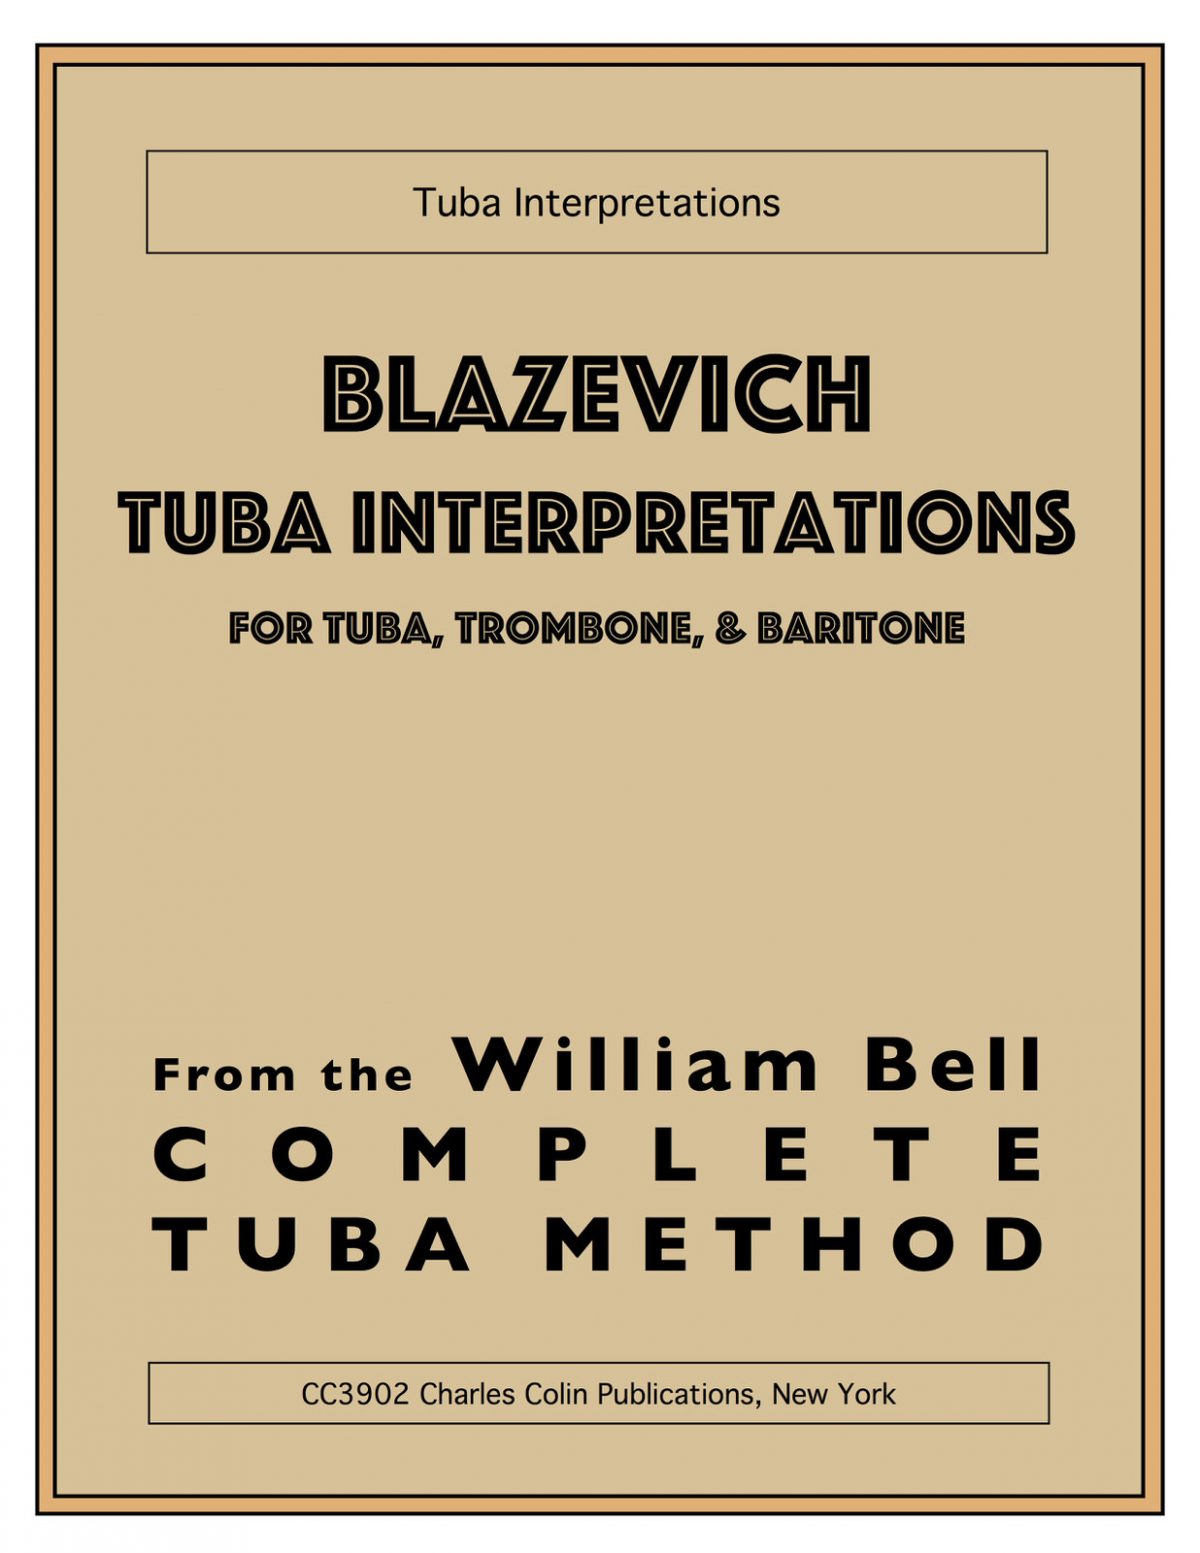 Blazevich Tuba Interpretations